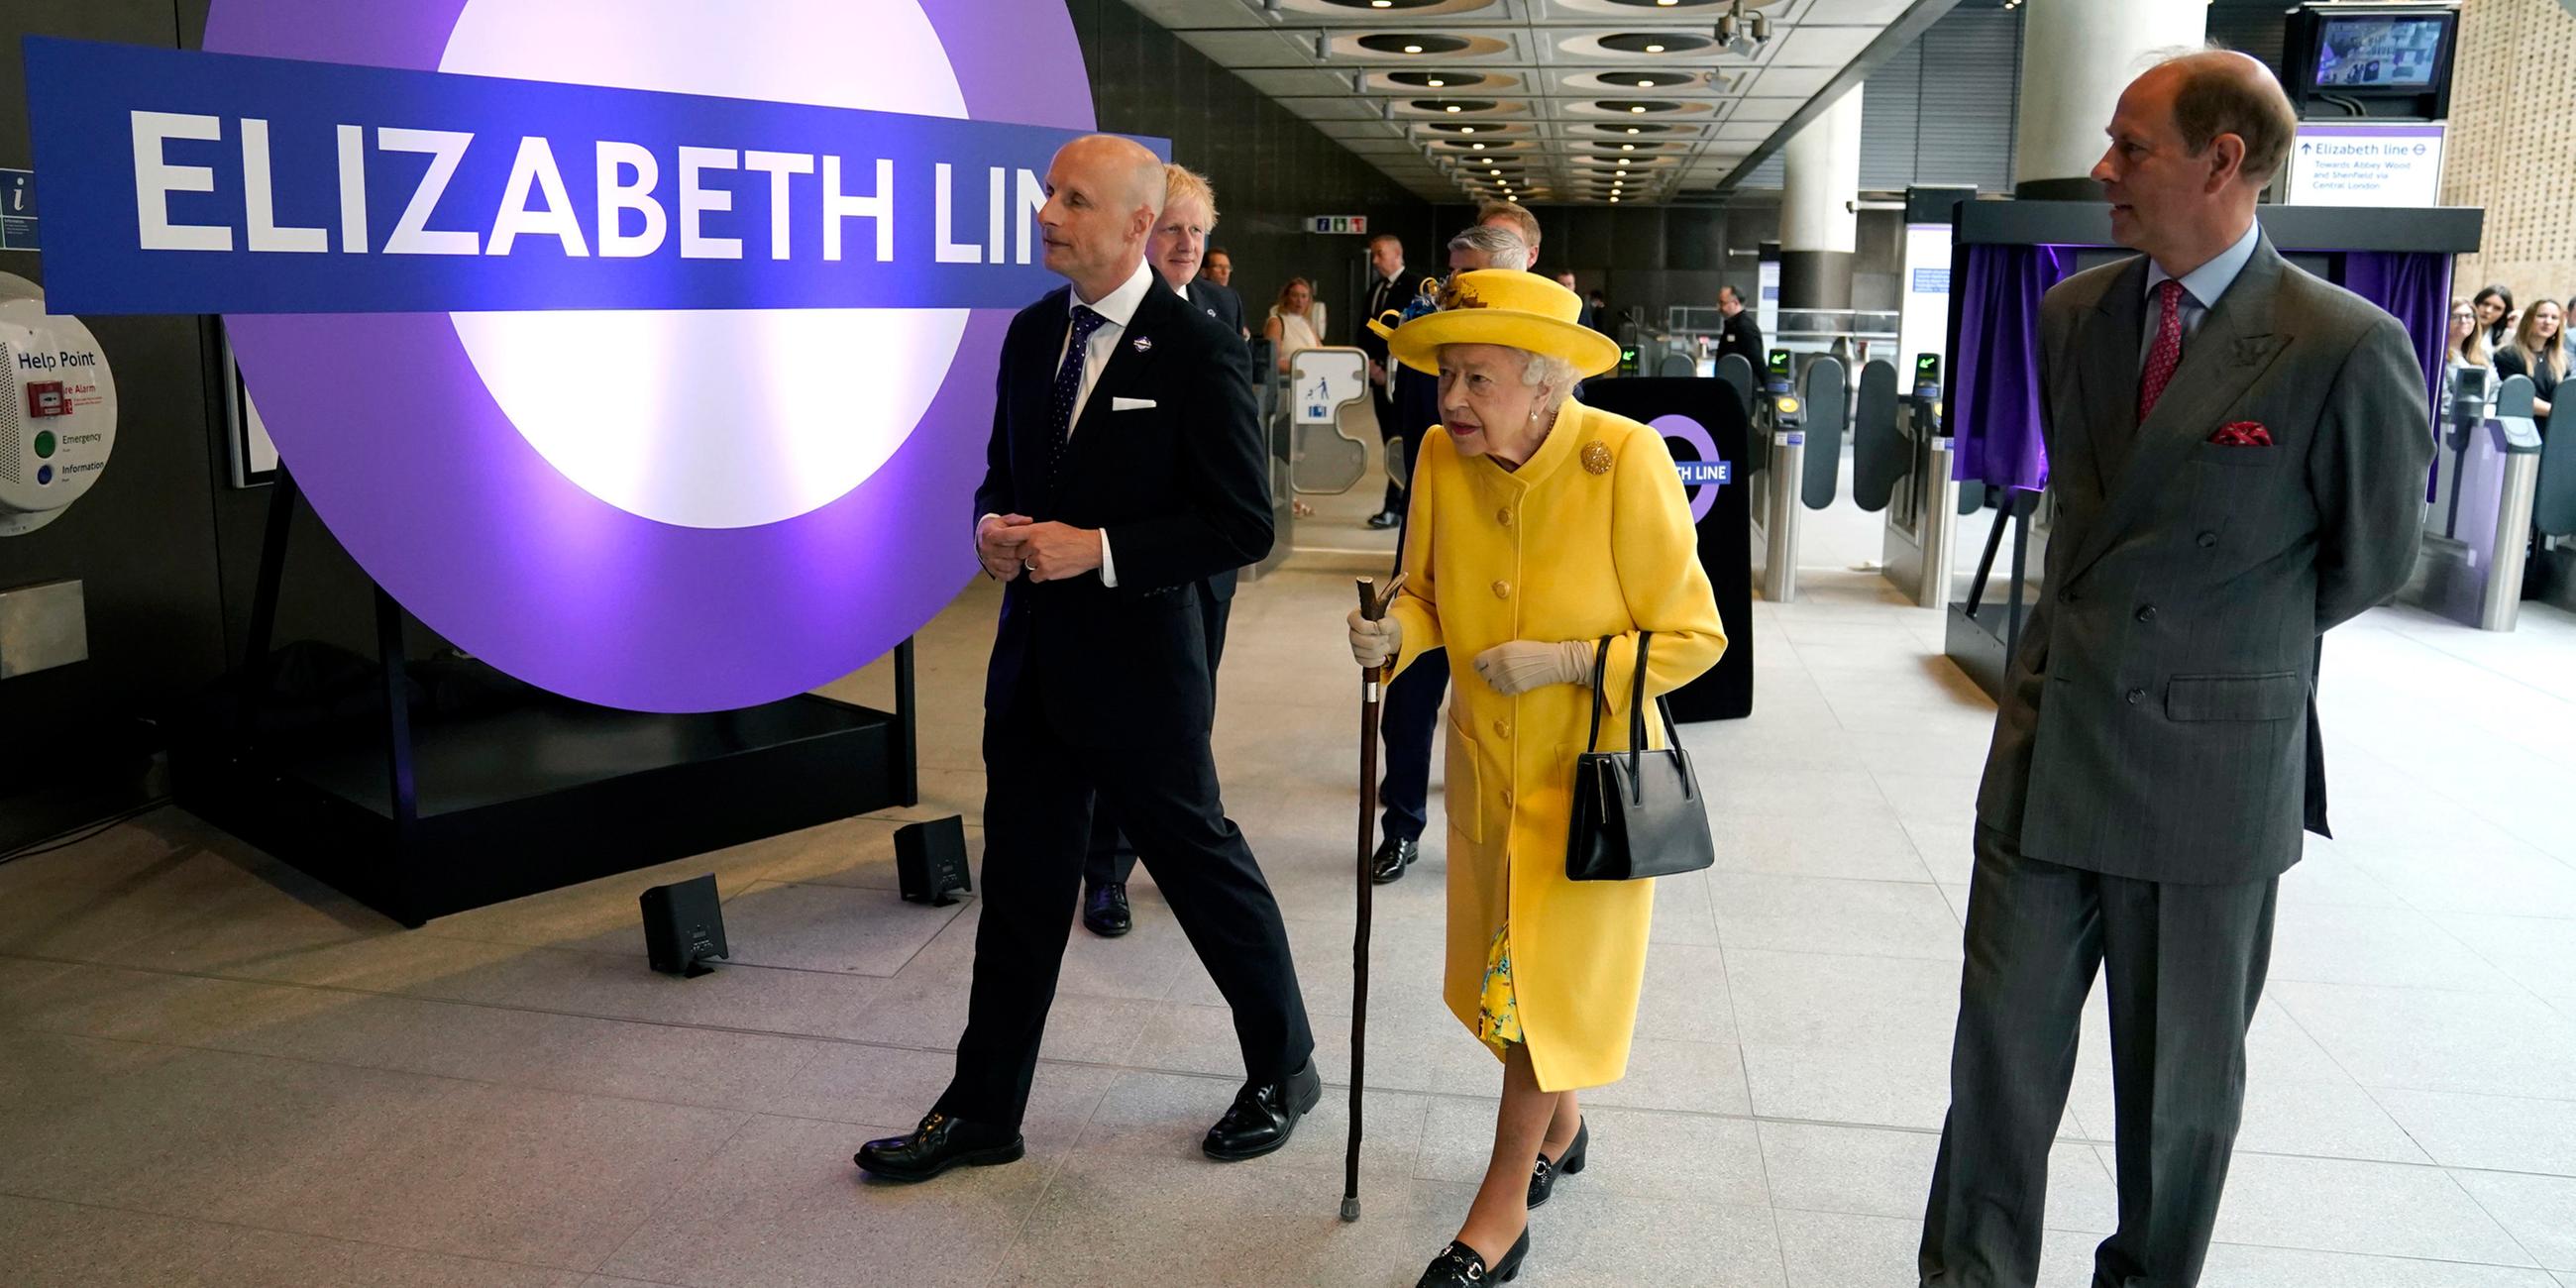 Queen Elizabeth II eröffnet ersten Abschnitt der neuen Londoner U-Bahn "Elizabeth Line"